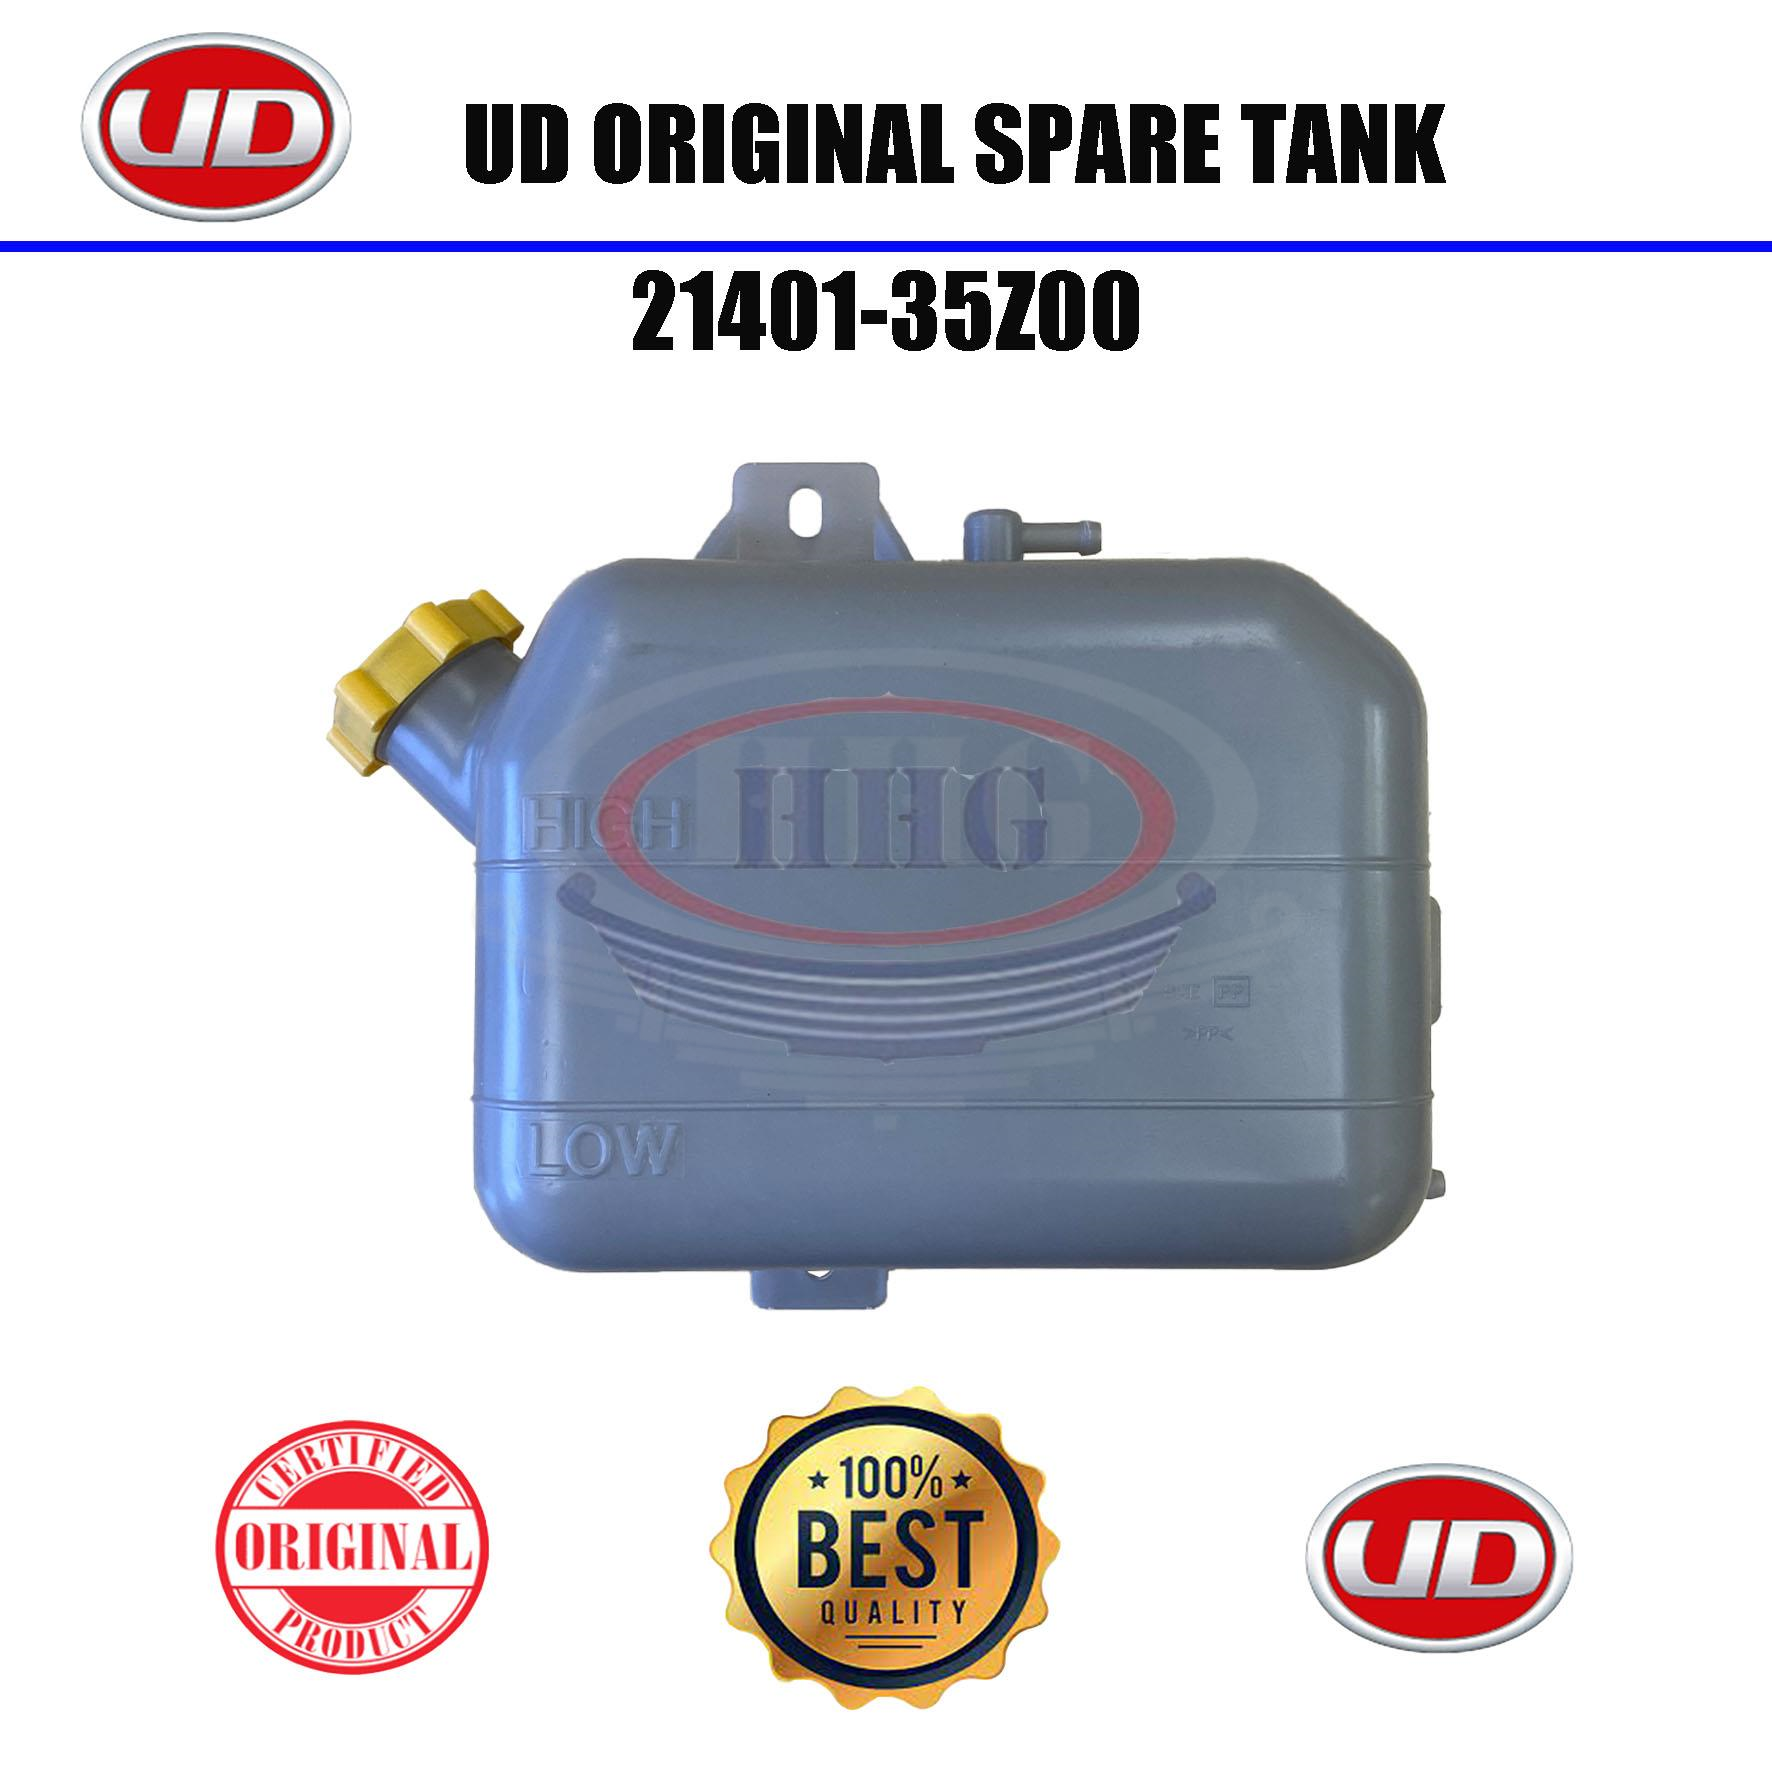 UD Original CPB15 Spare Tank (21401-35Z00)